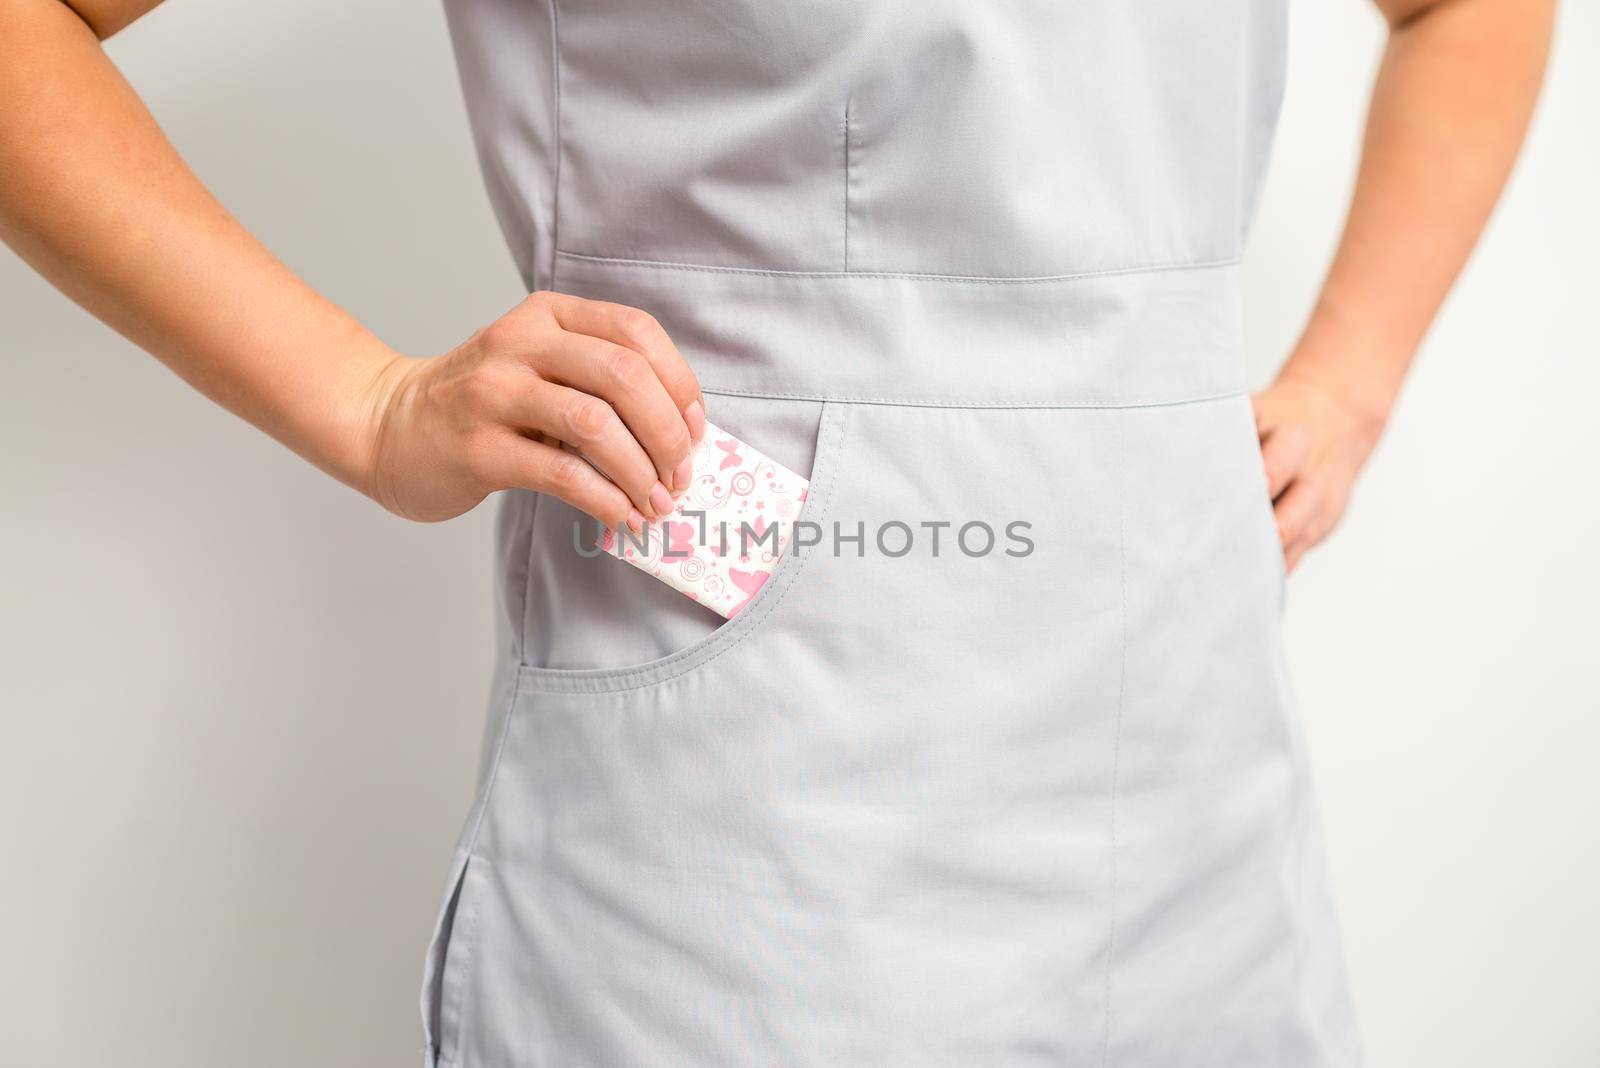 The female hand puts menstrual sanitary pads into her pocket, close up. by okskukuruza